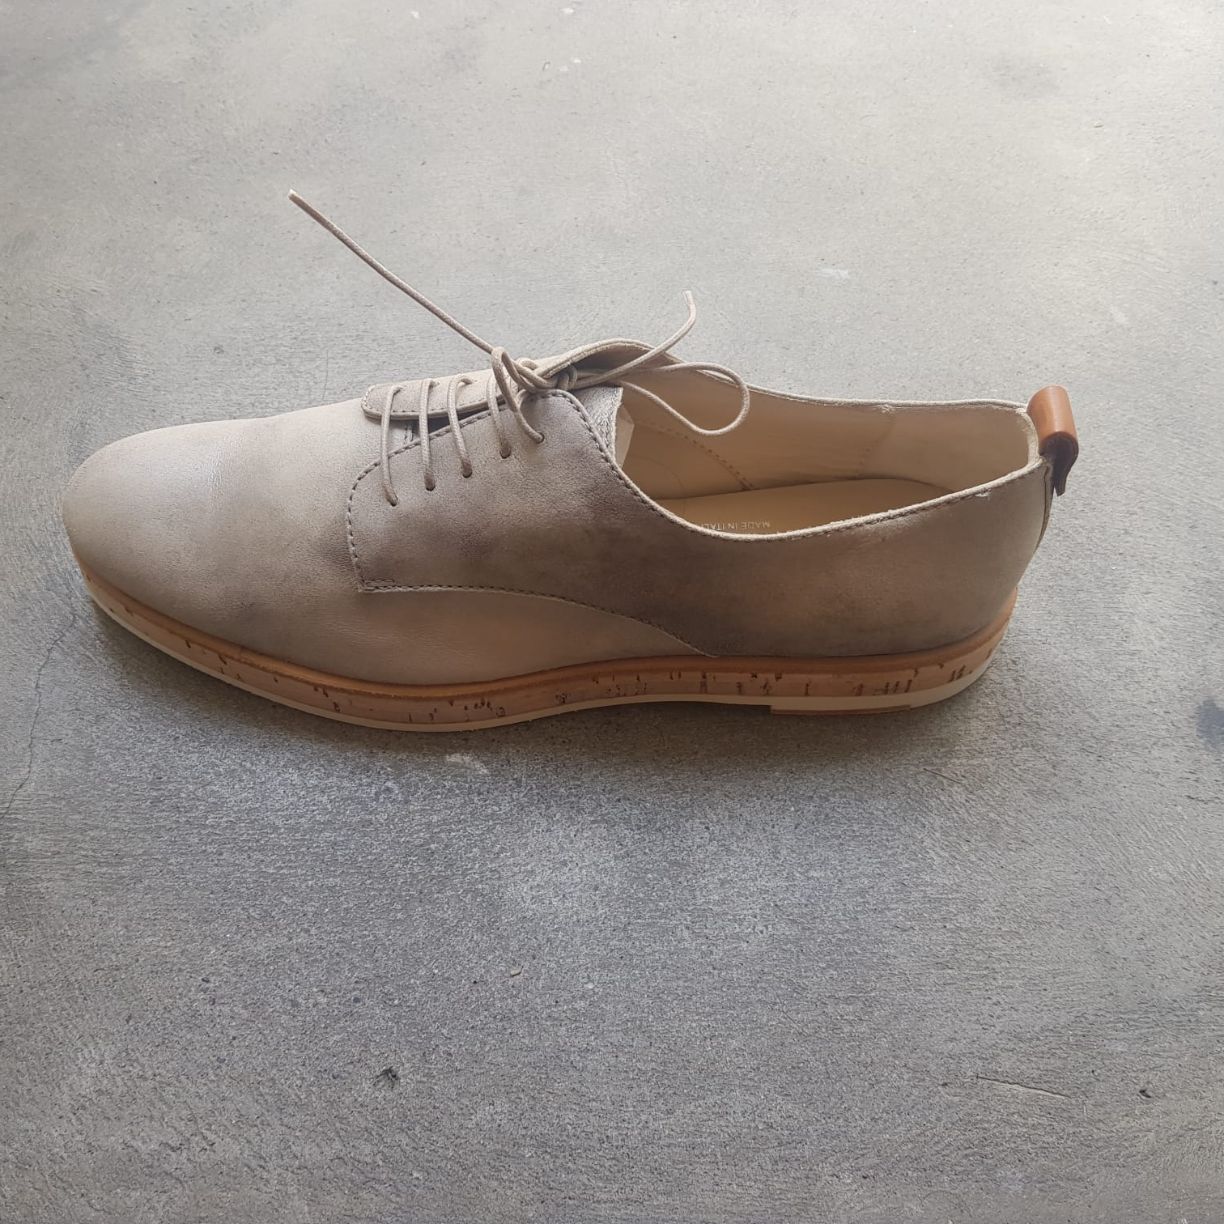 DONNA Les Boutiques - Shoes leather with cork sole